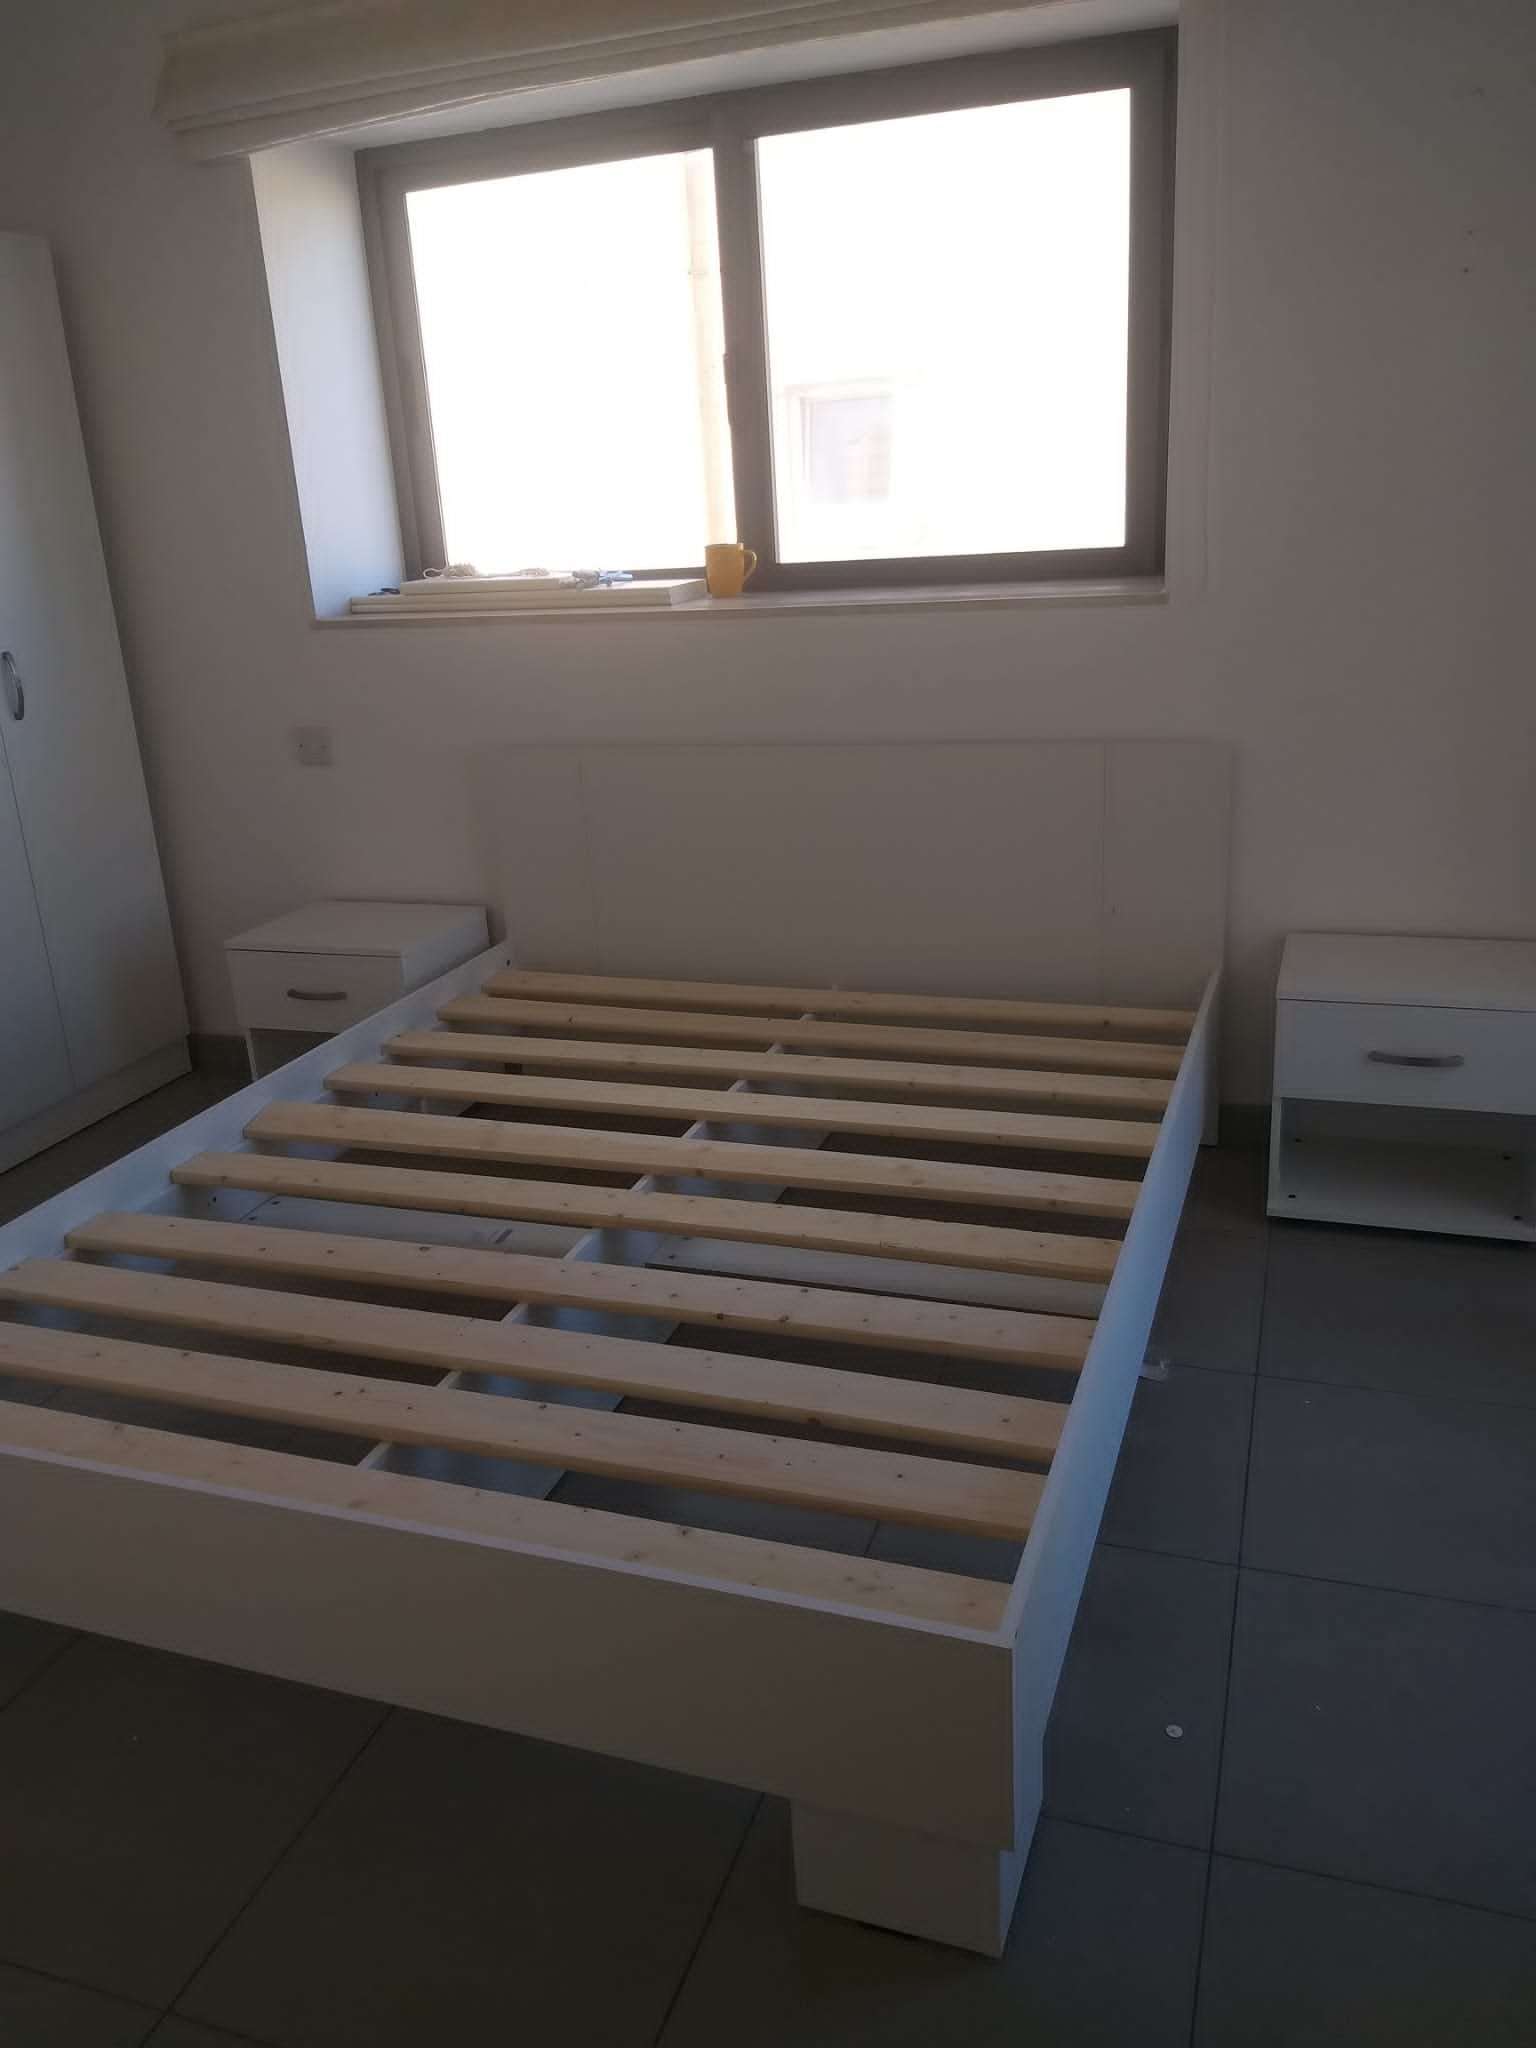 bedrooms malta cheap affordable furniture ikea krea